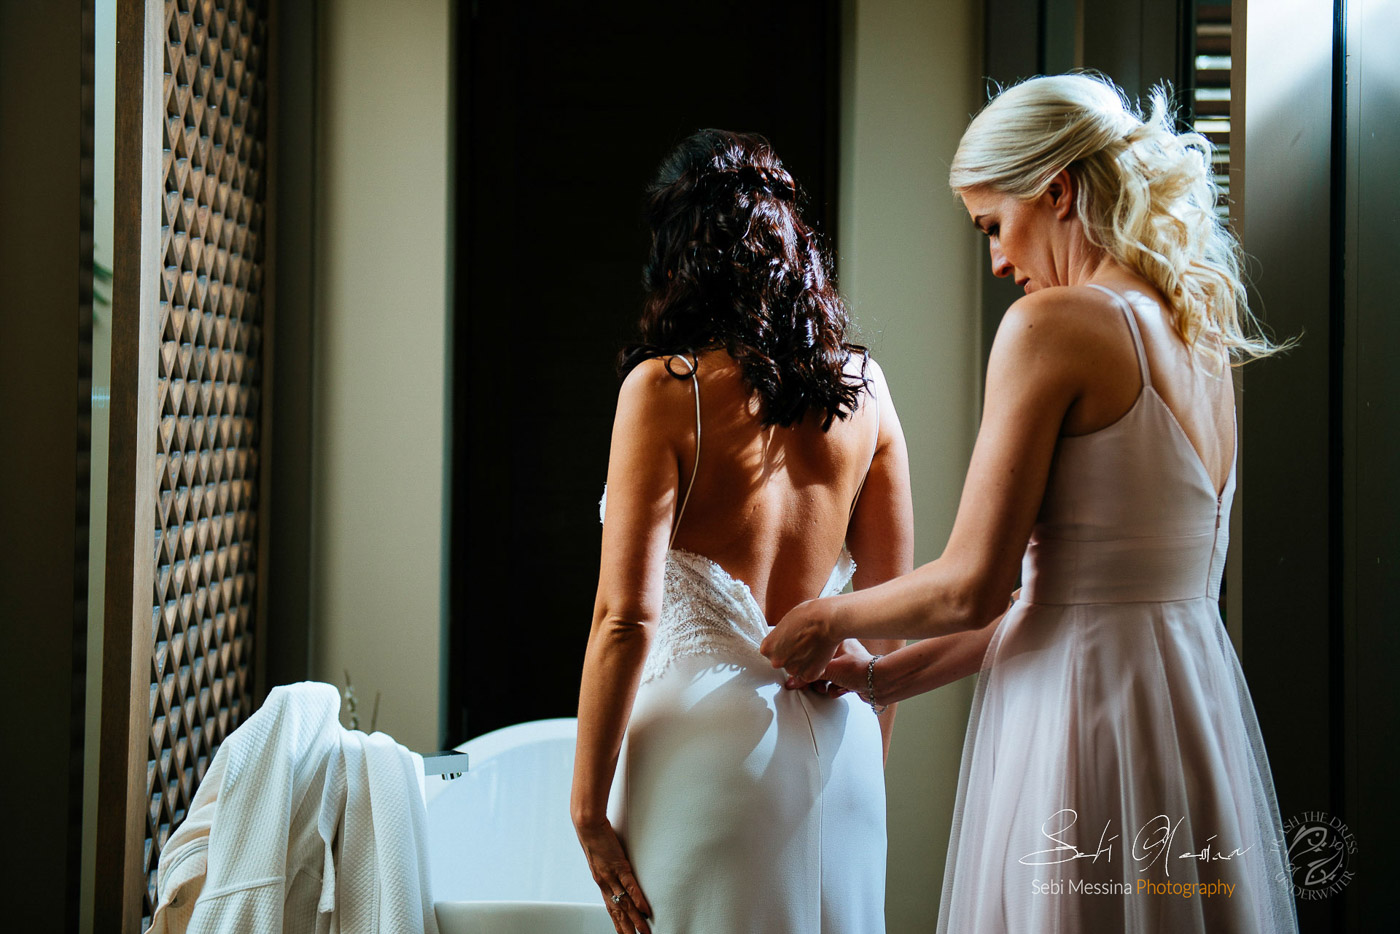 Wedding Nizuc – Sebi Messina Photography